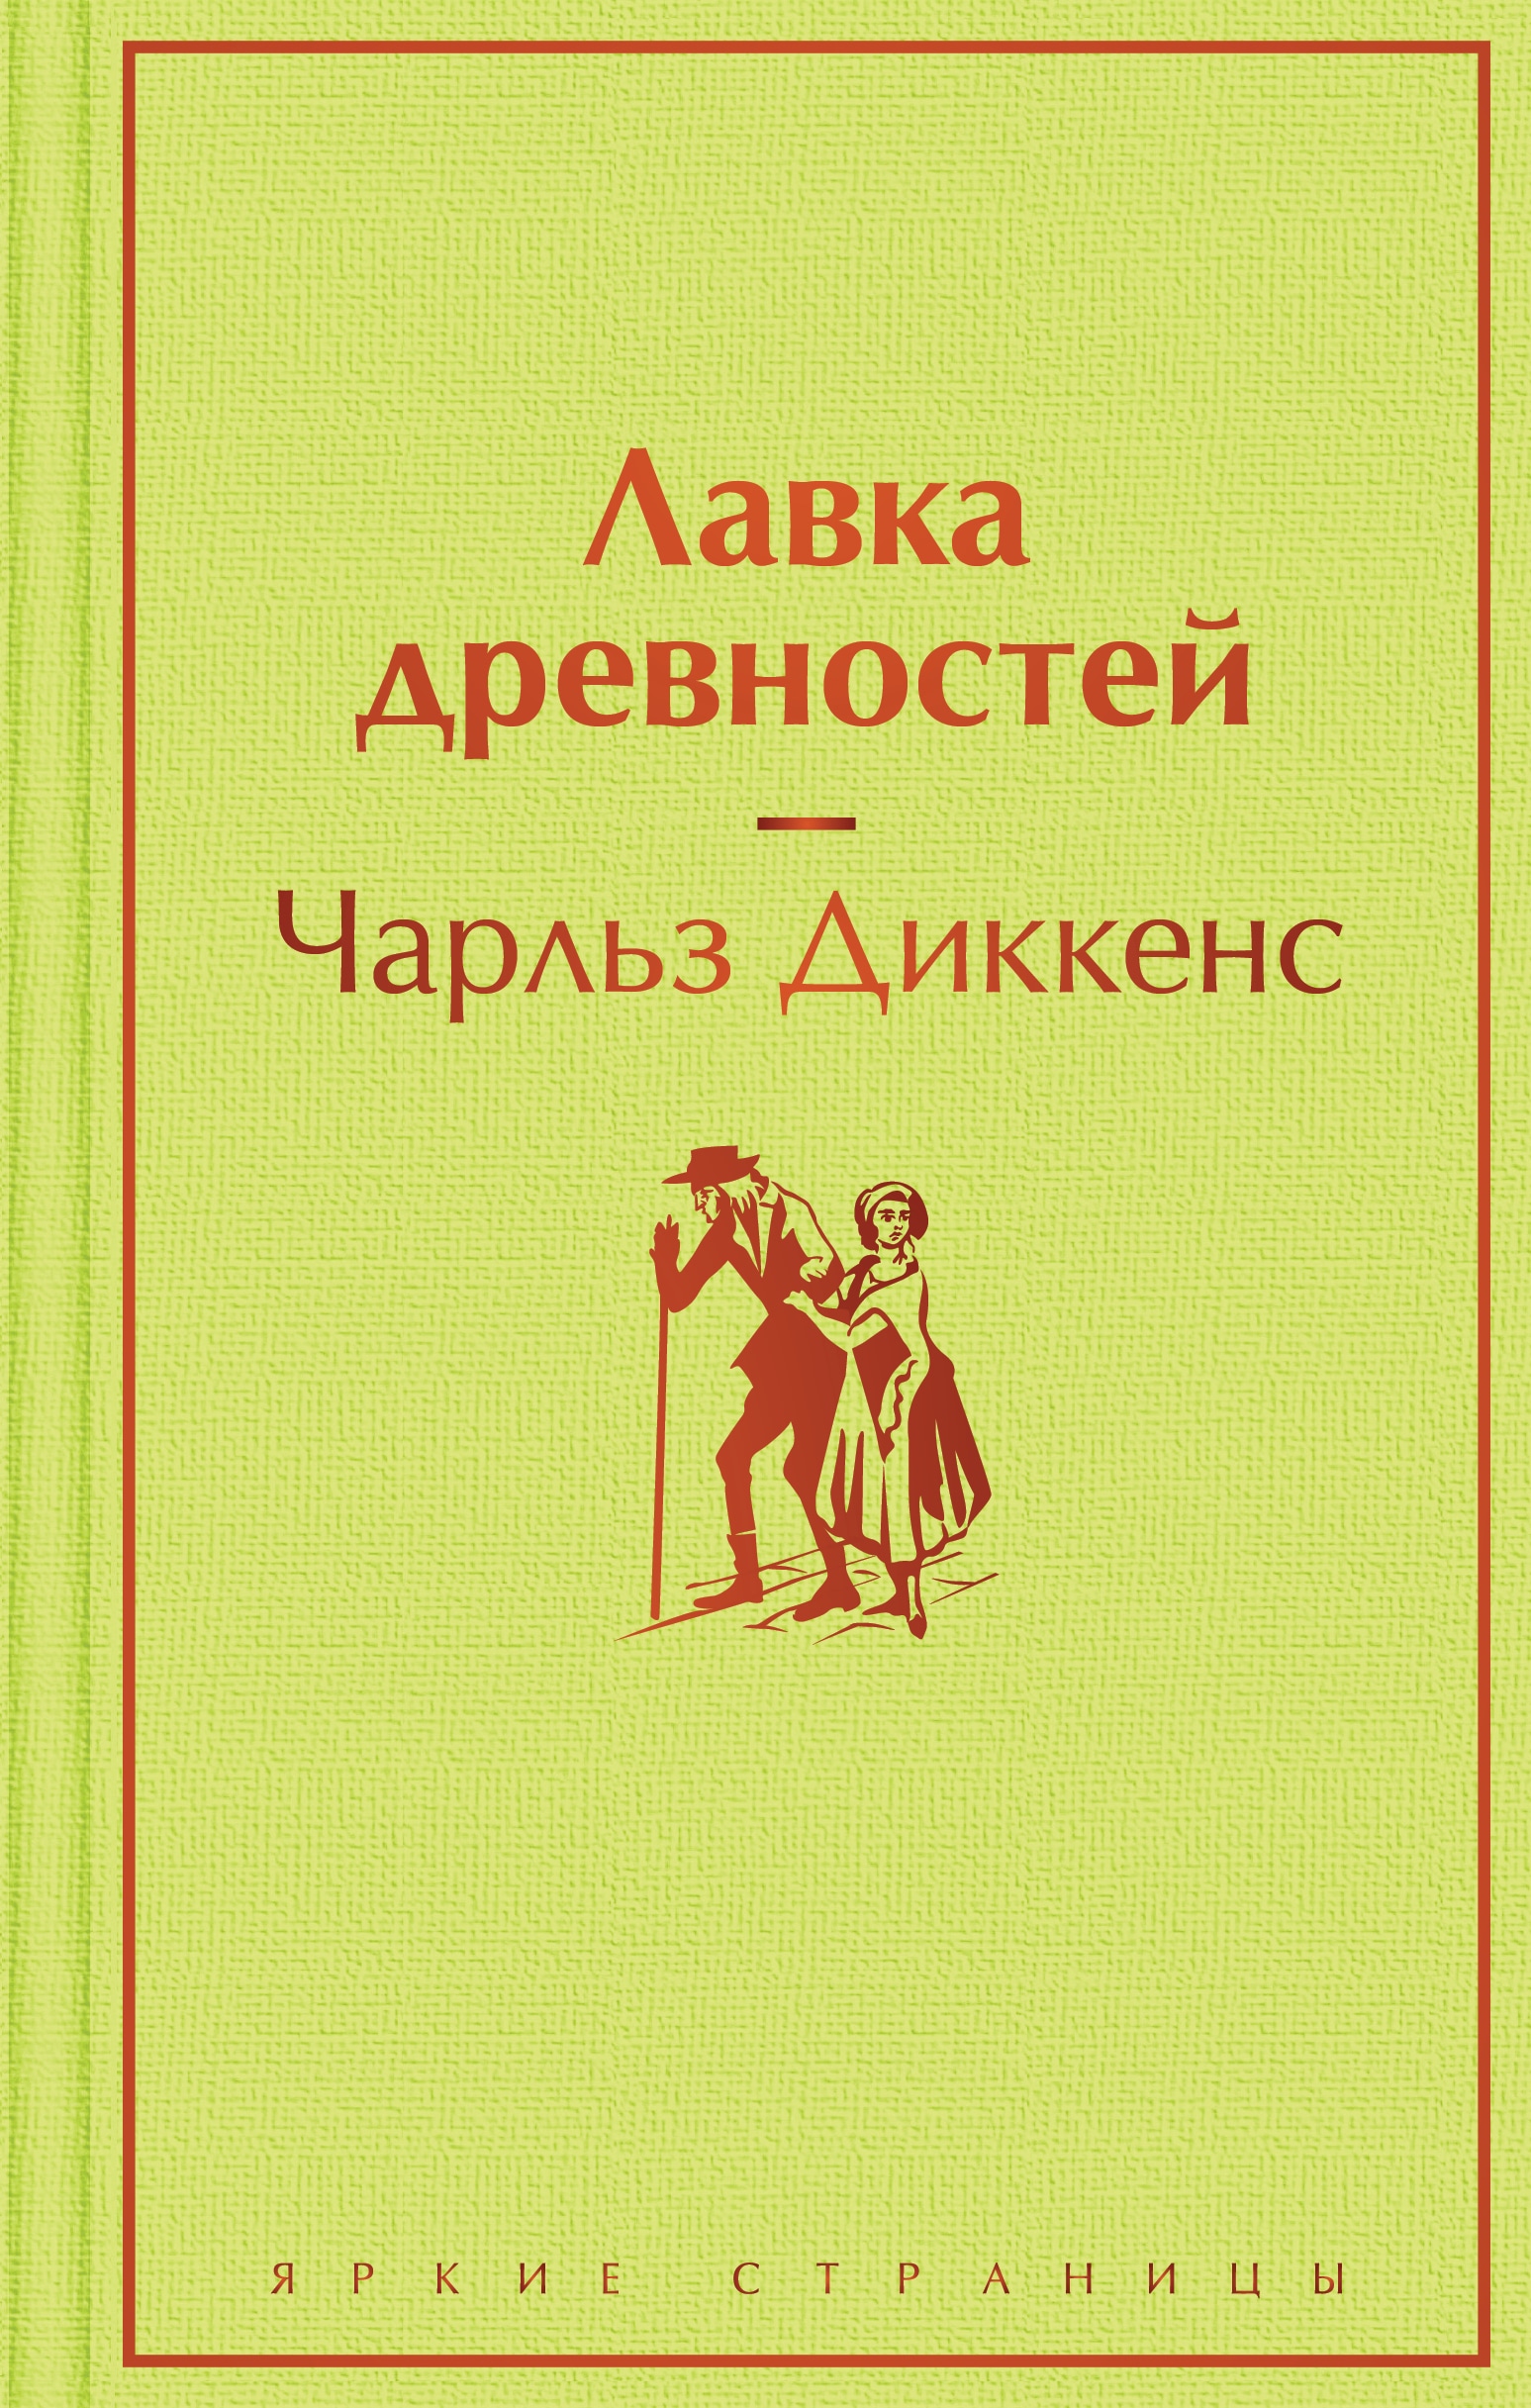 Book “Лавка древностей” by Чарльз Диккенс — 2023